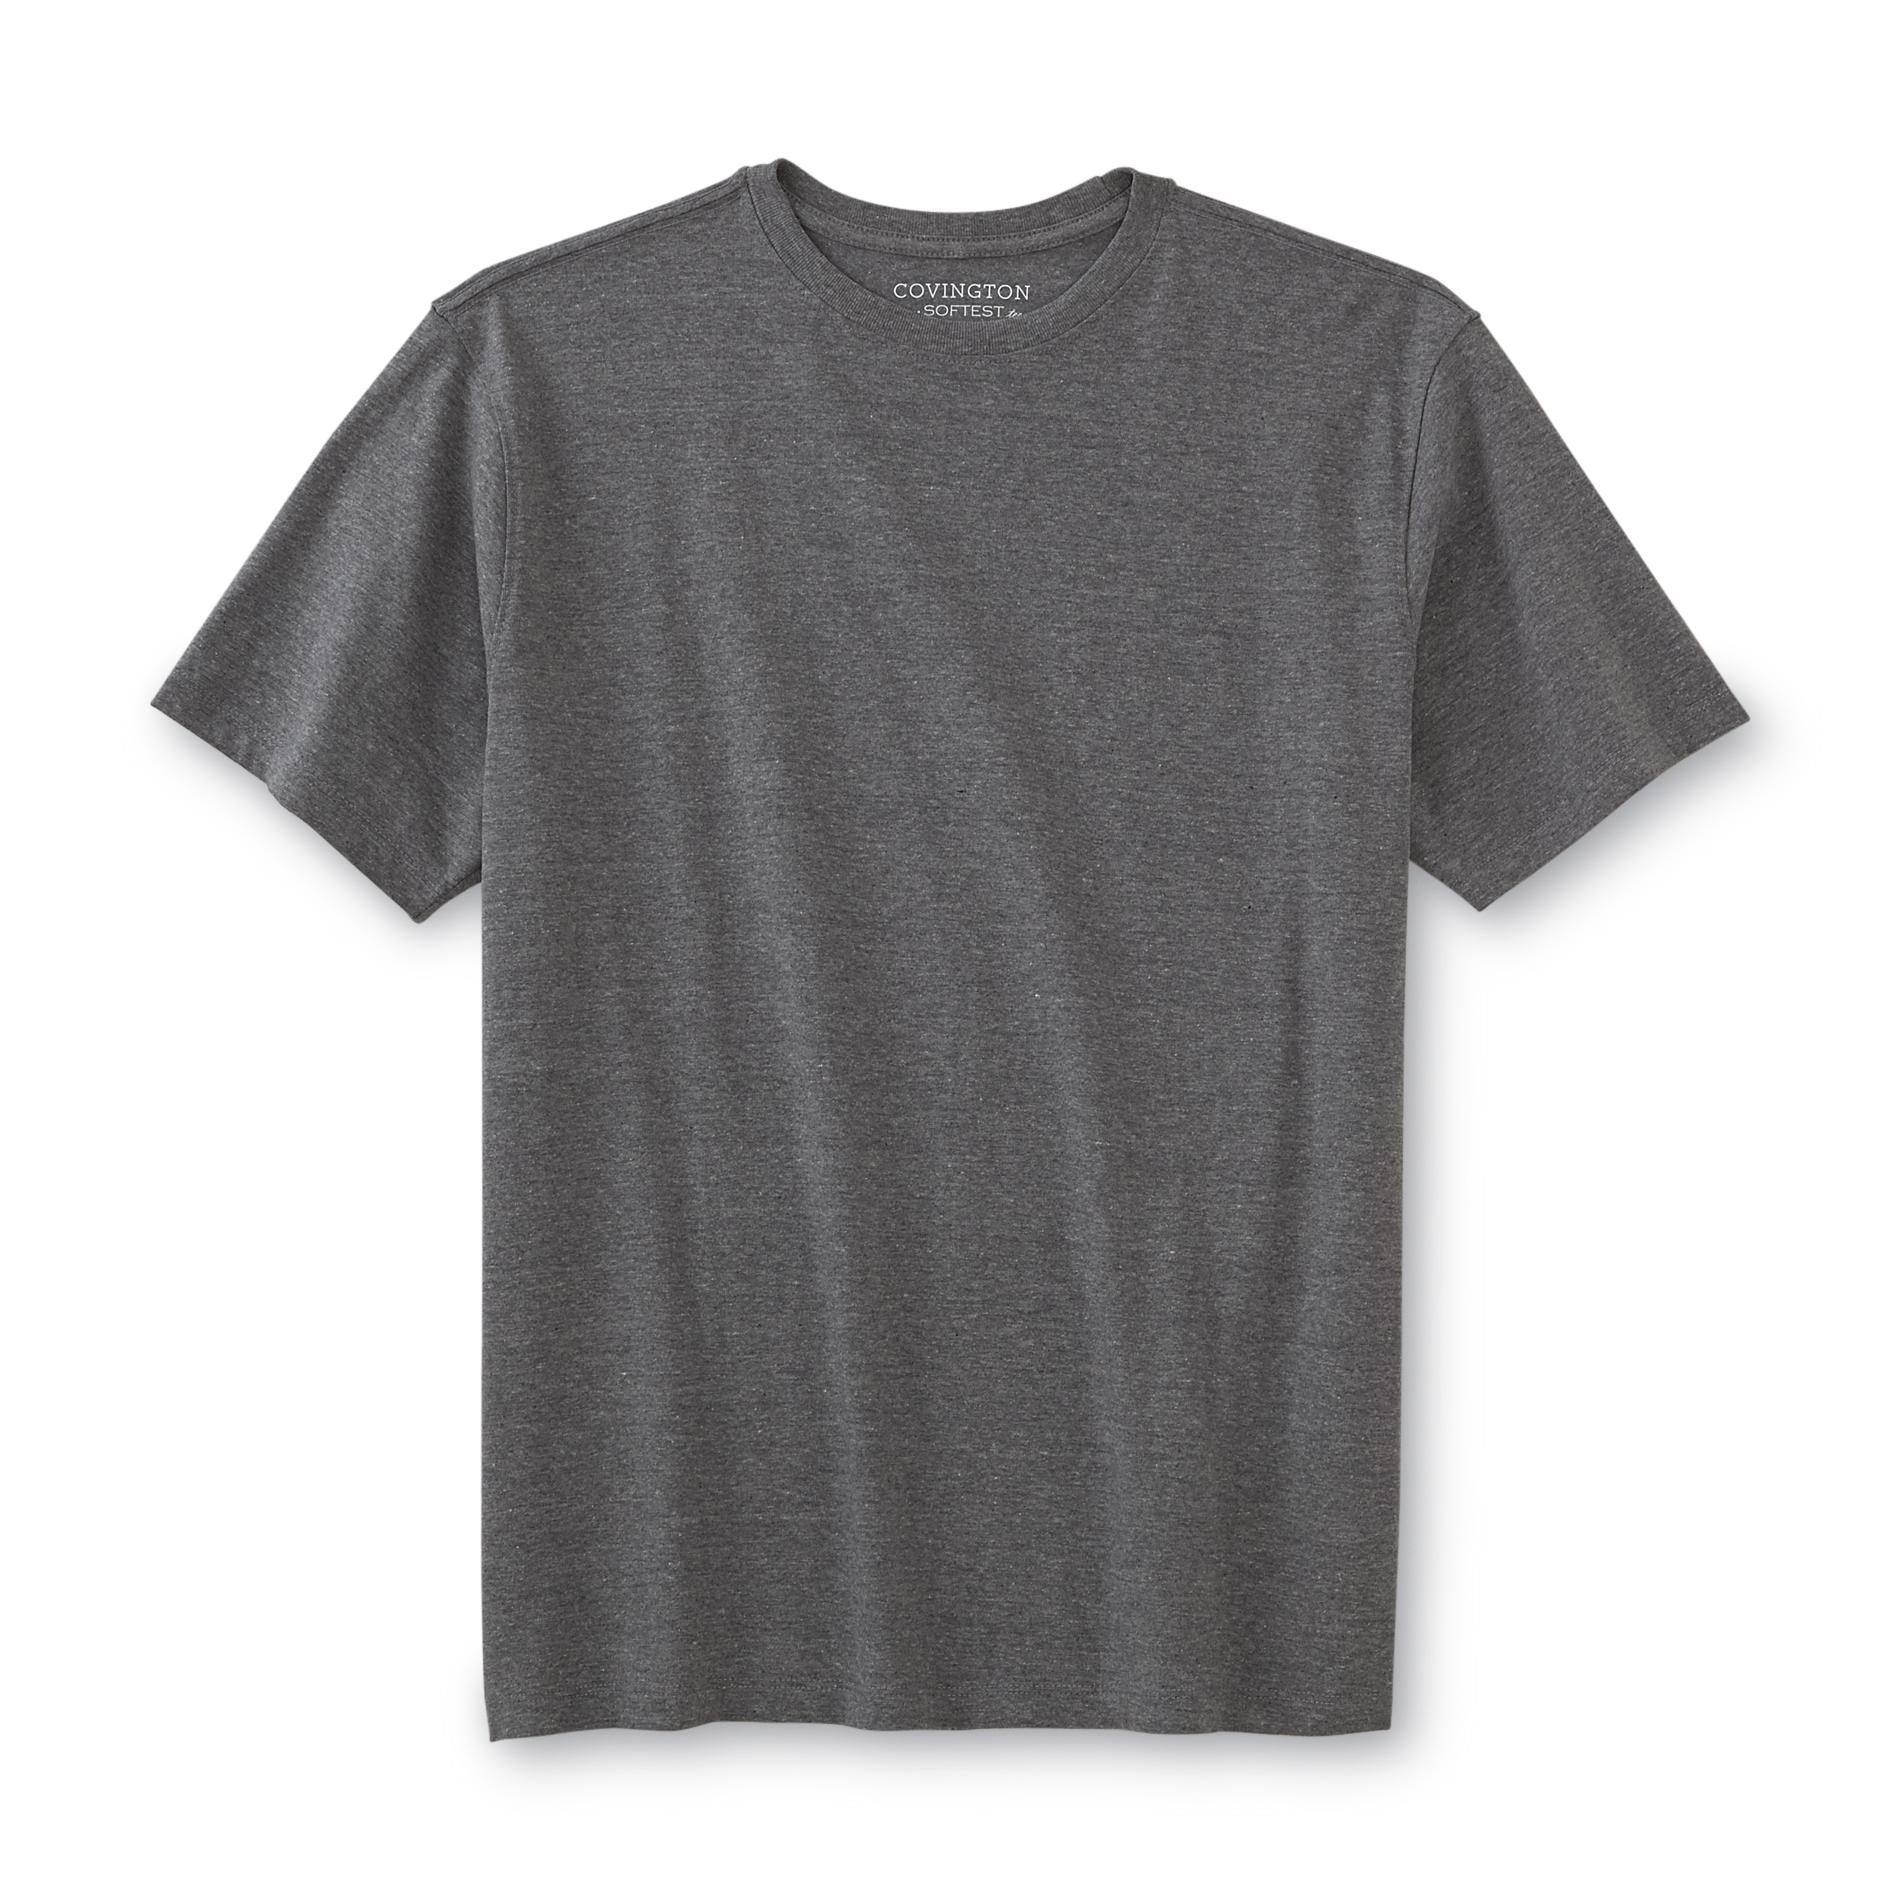 Covington Men's Softest T-Shirt - Heathered